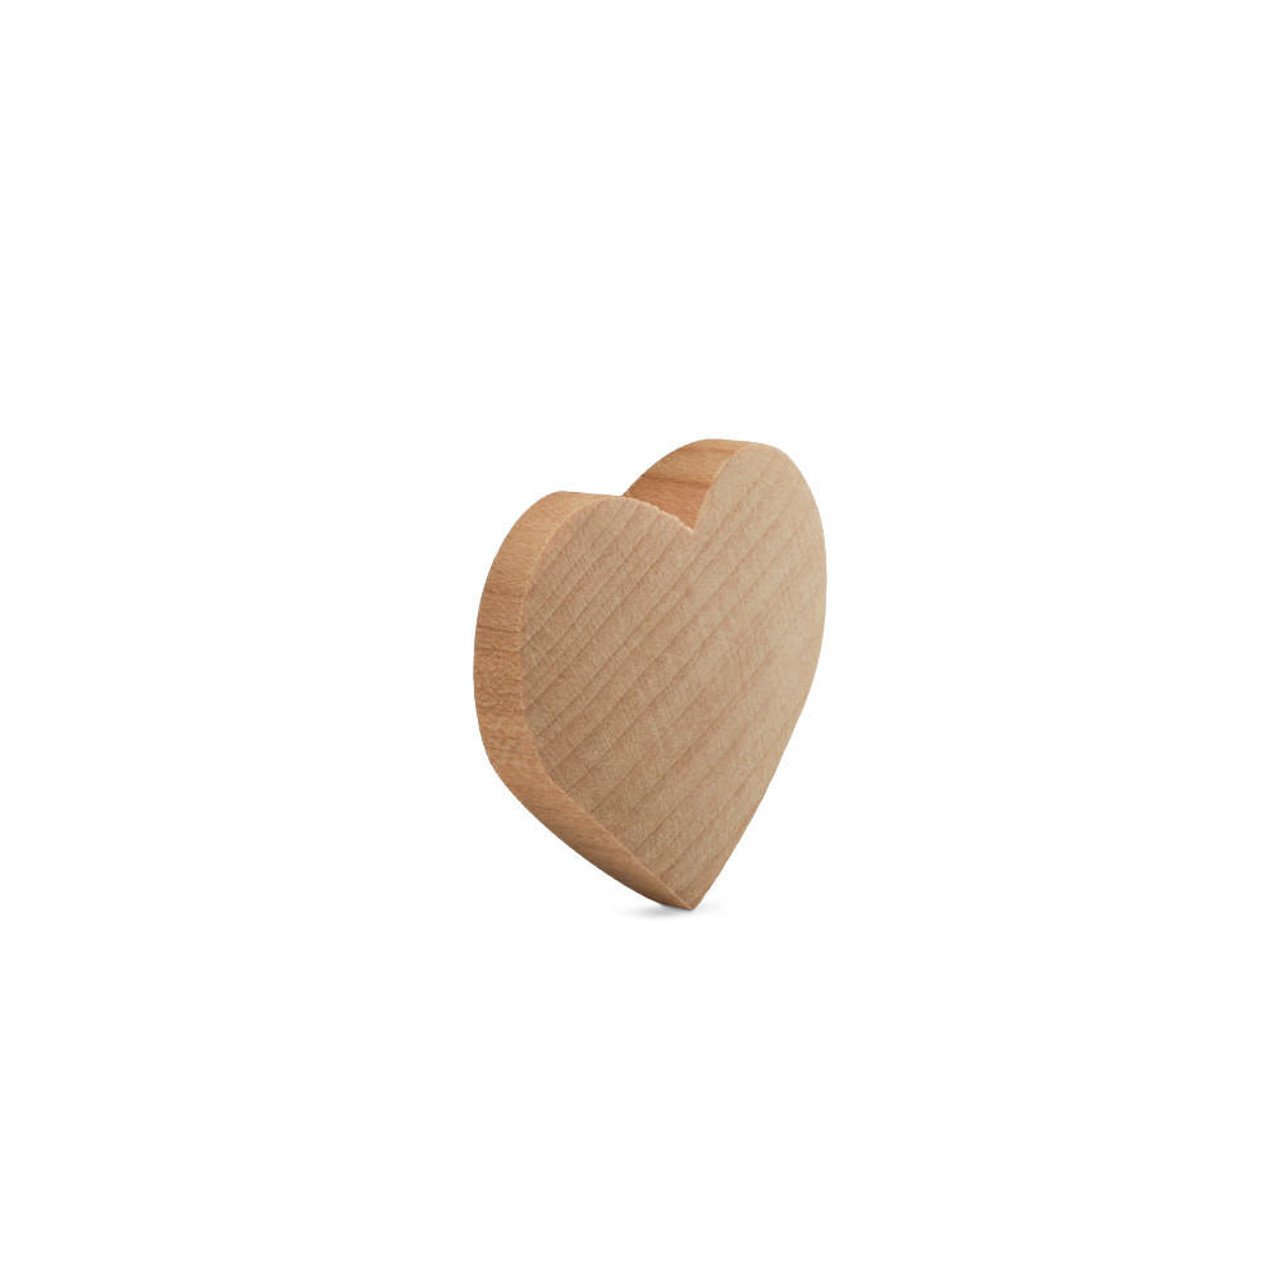 Wood Heart Flat 3/4 inch by 1/2 inch